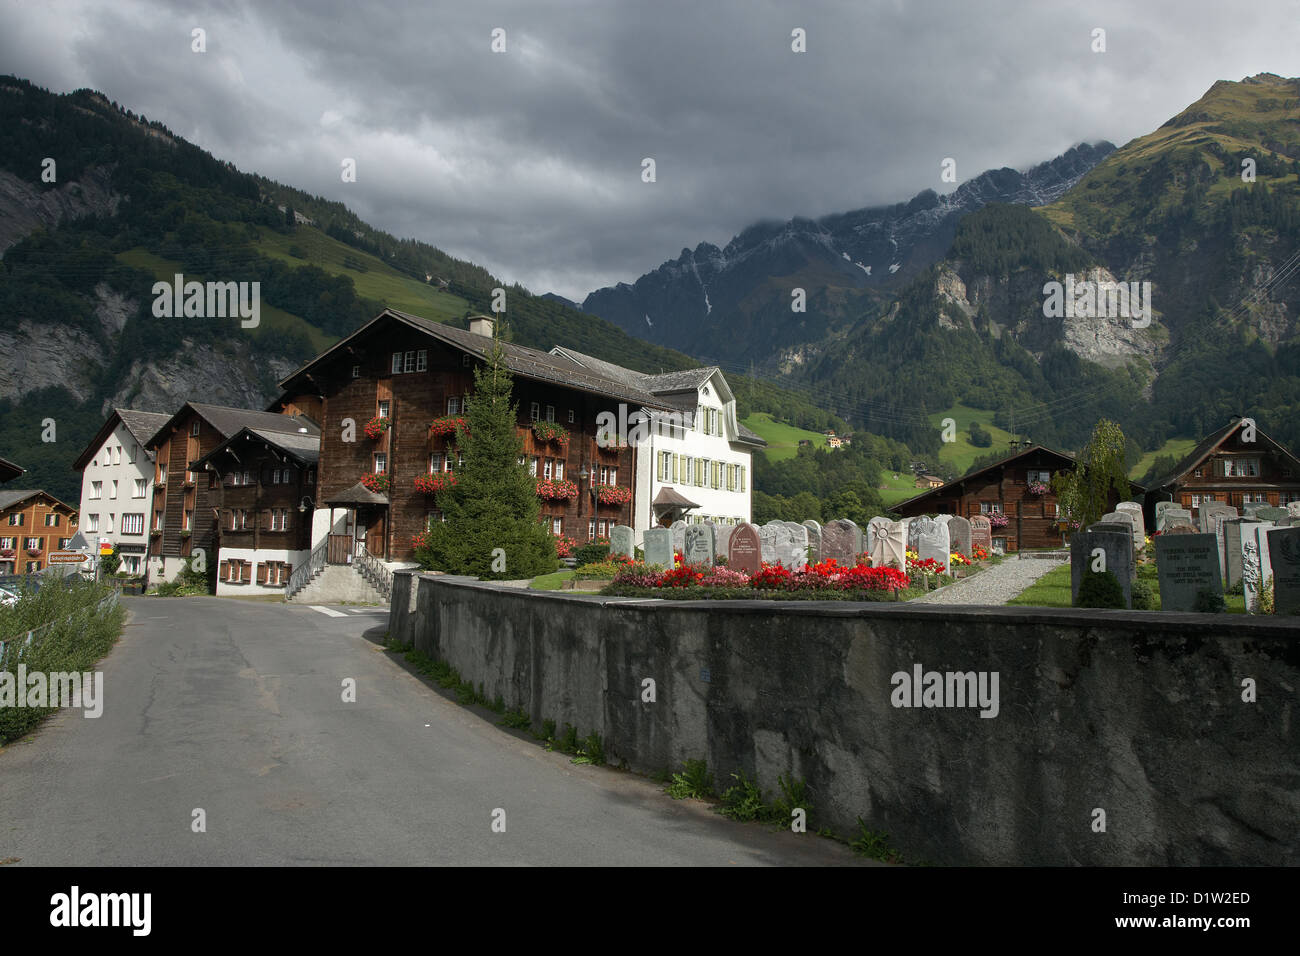 Elm, Switzerland, overlooking Elm with its historic houses Stock Photo